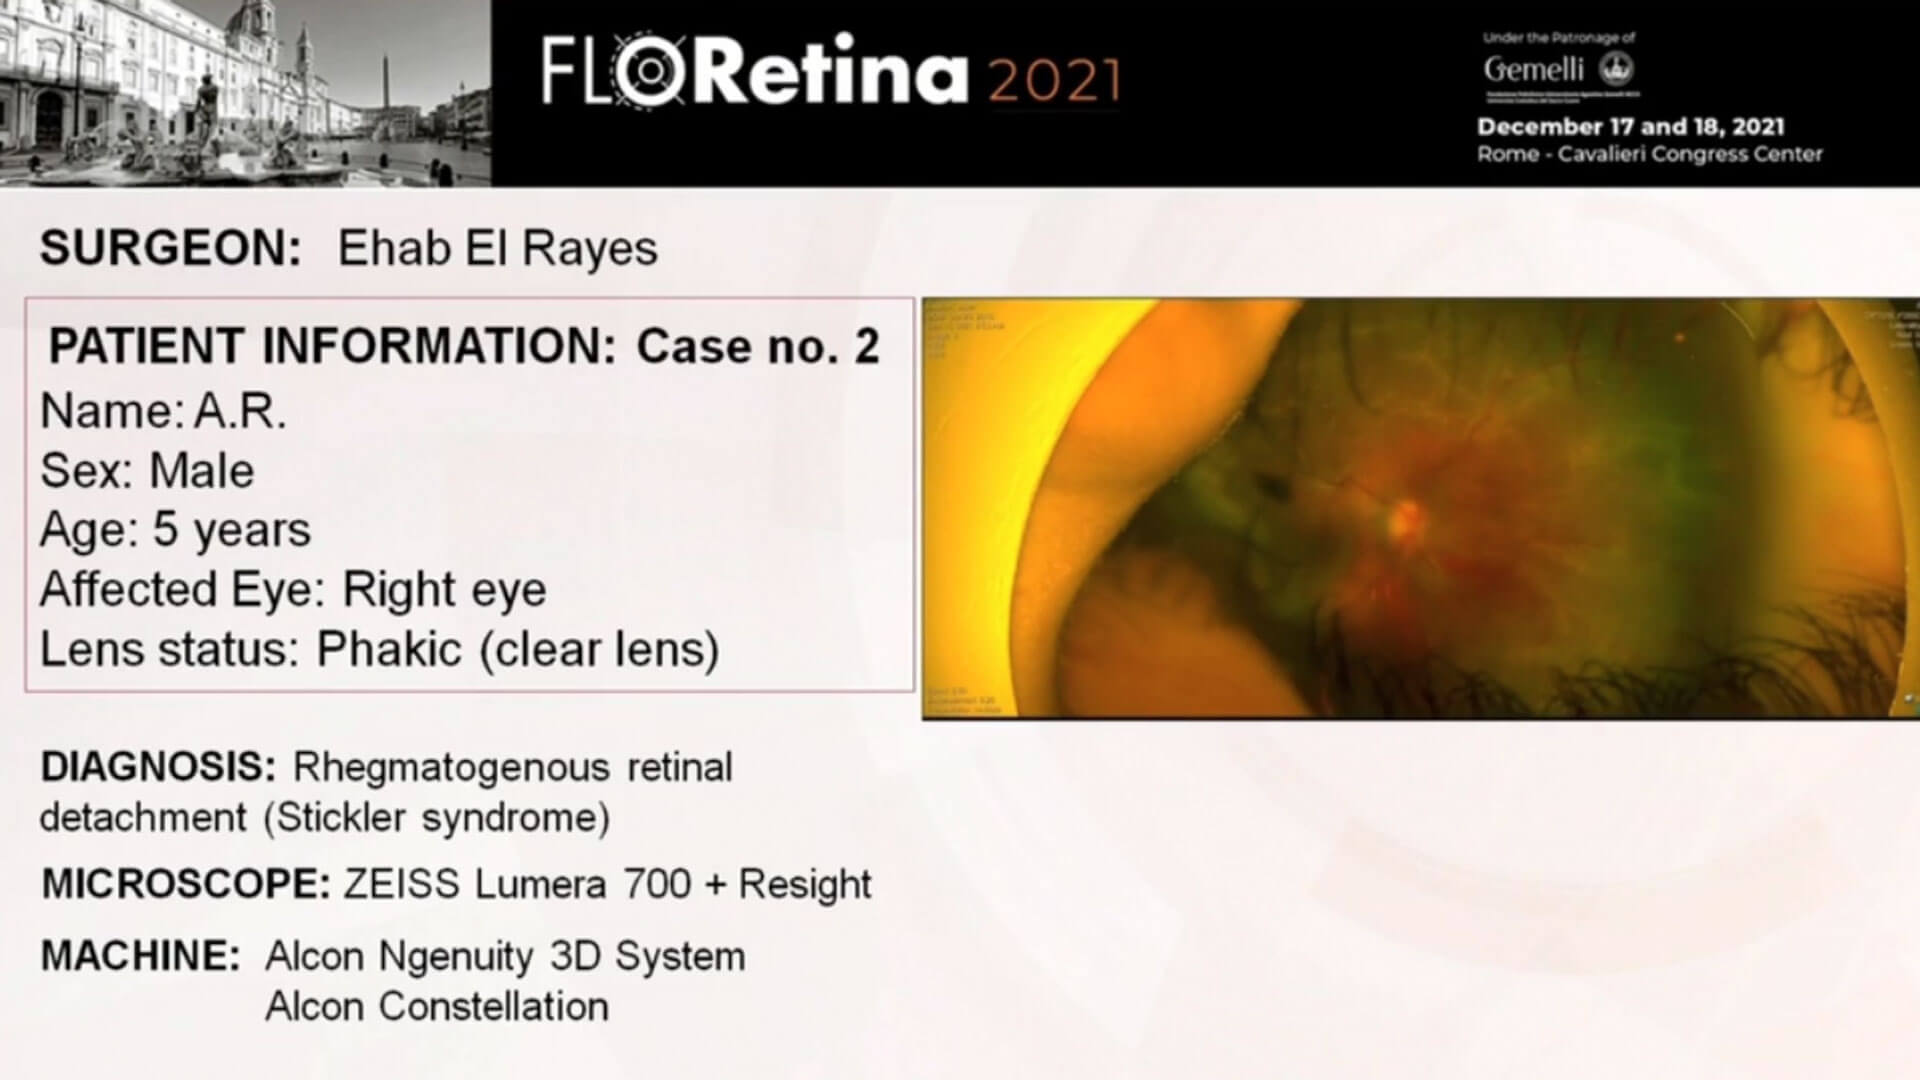 Rhegmatogenous Retinal Detachment (Stickler syndrome)